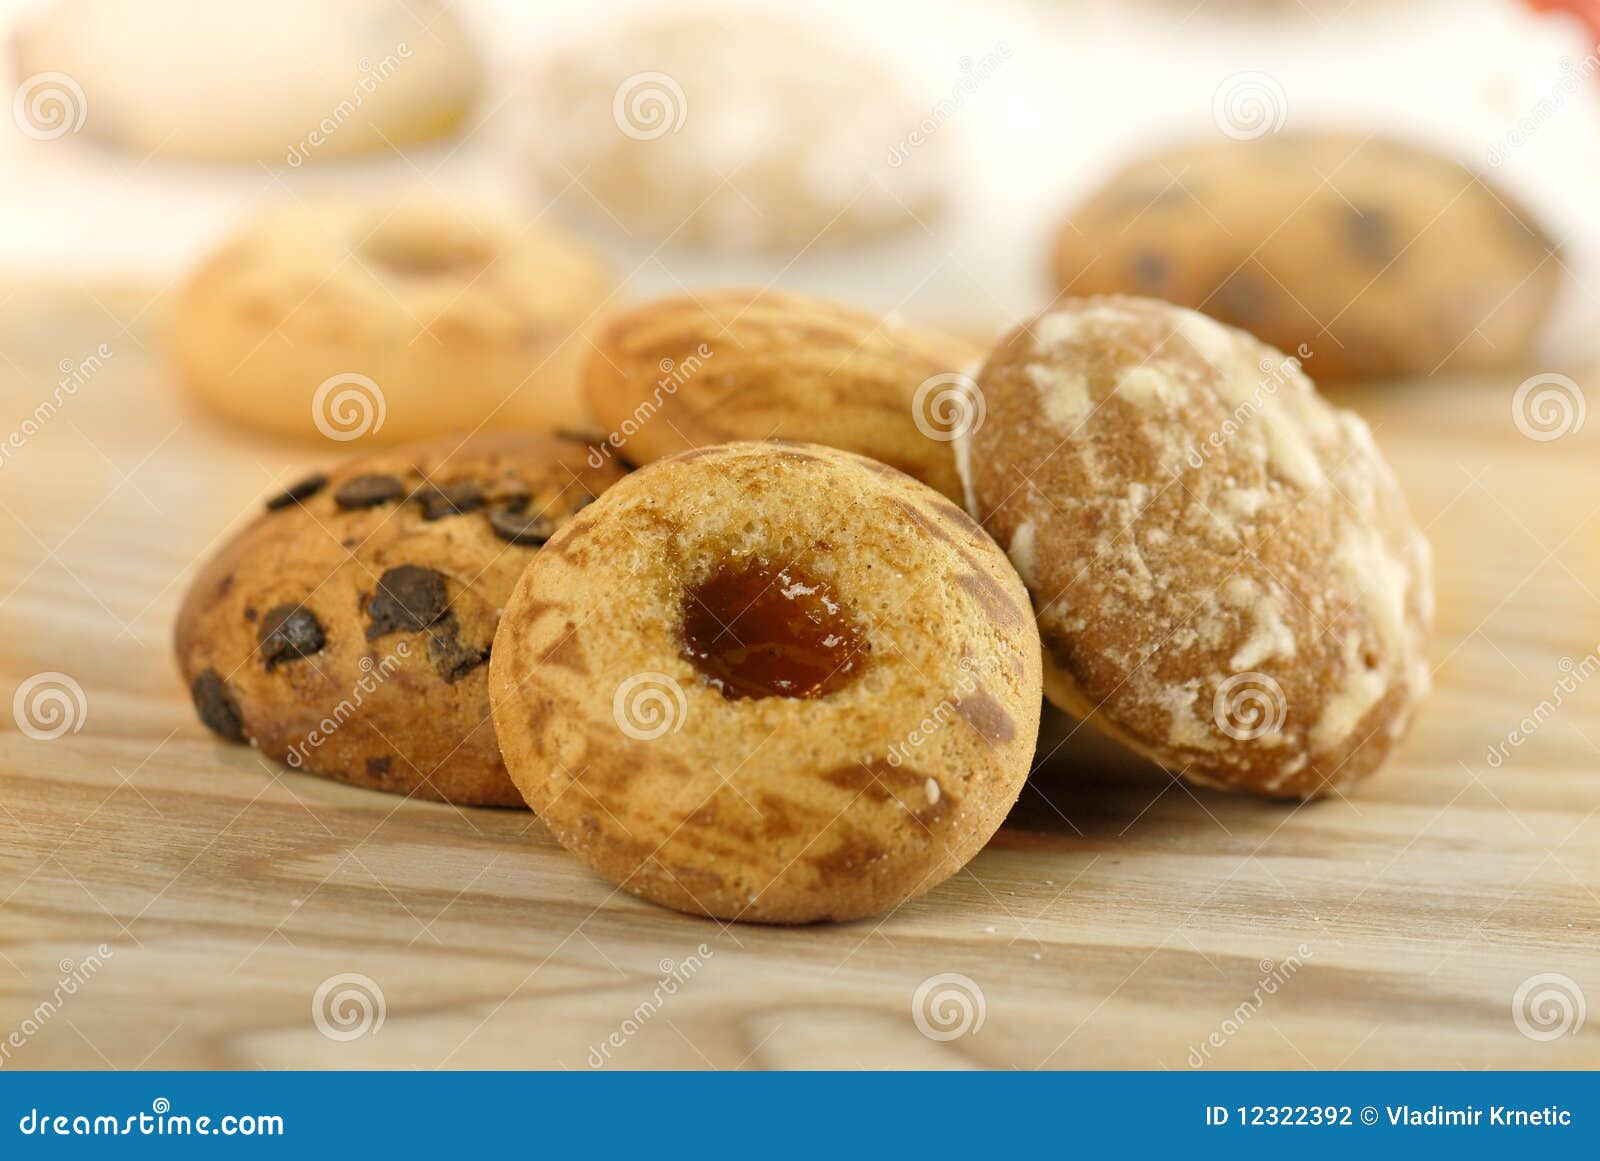 decorative biscuits